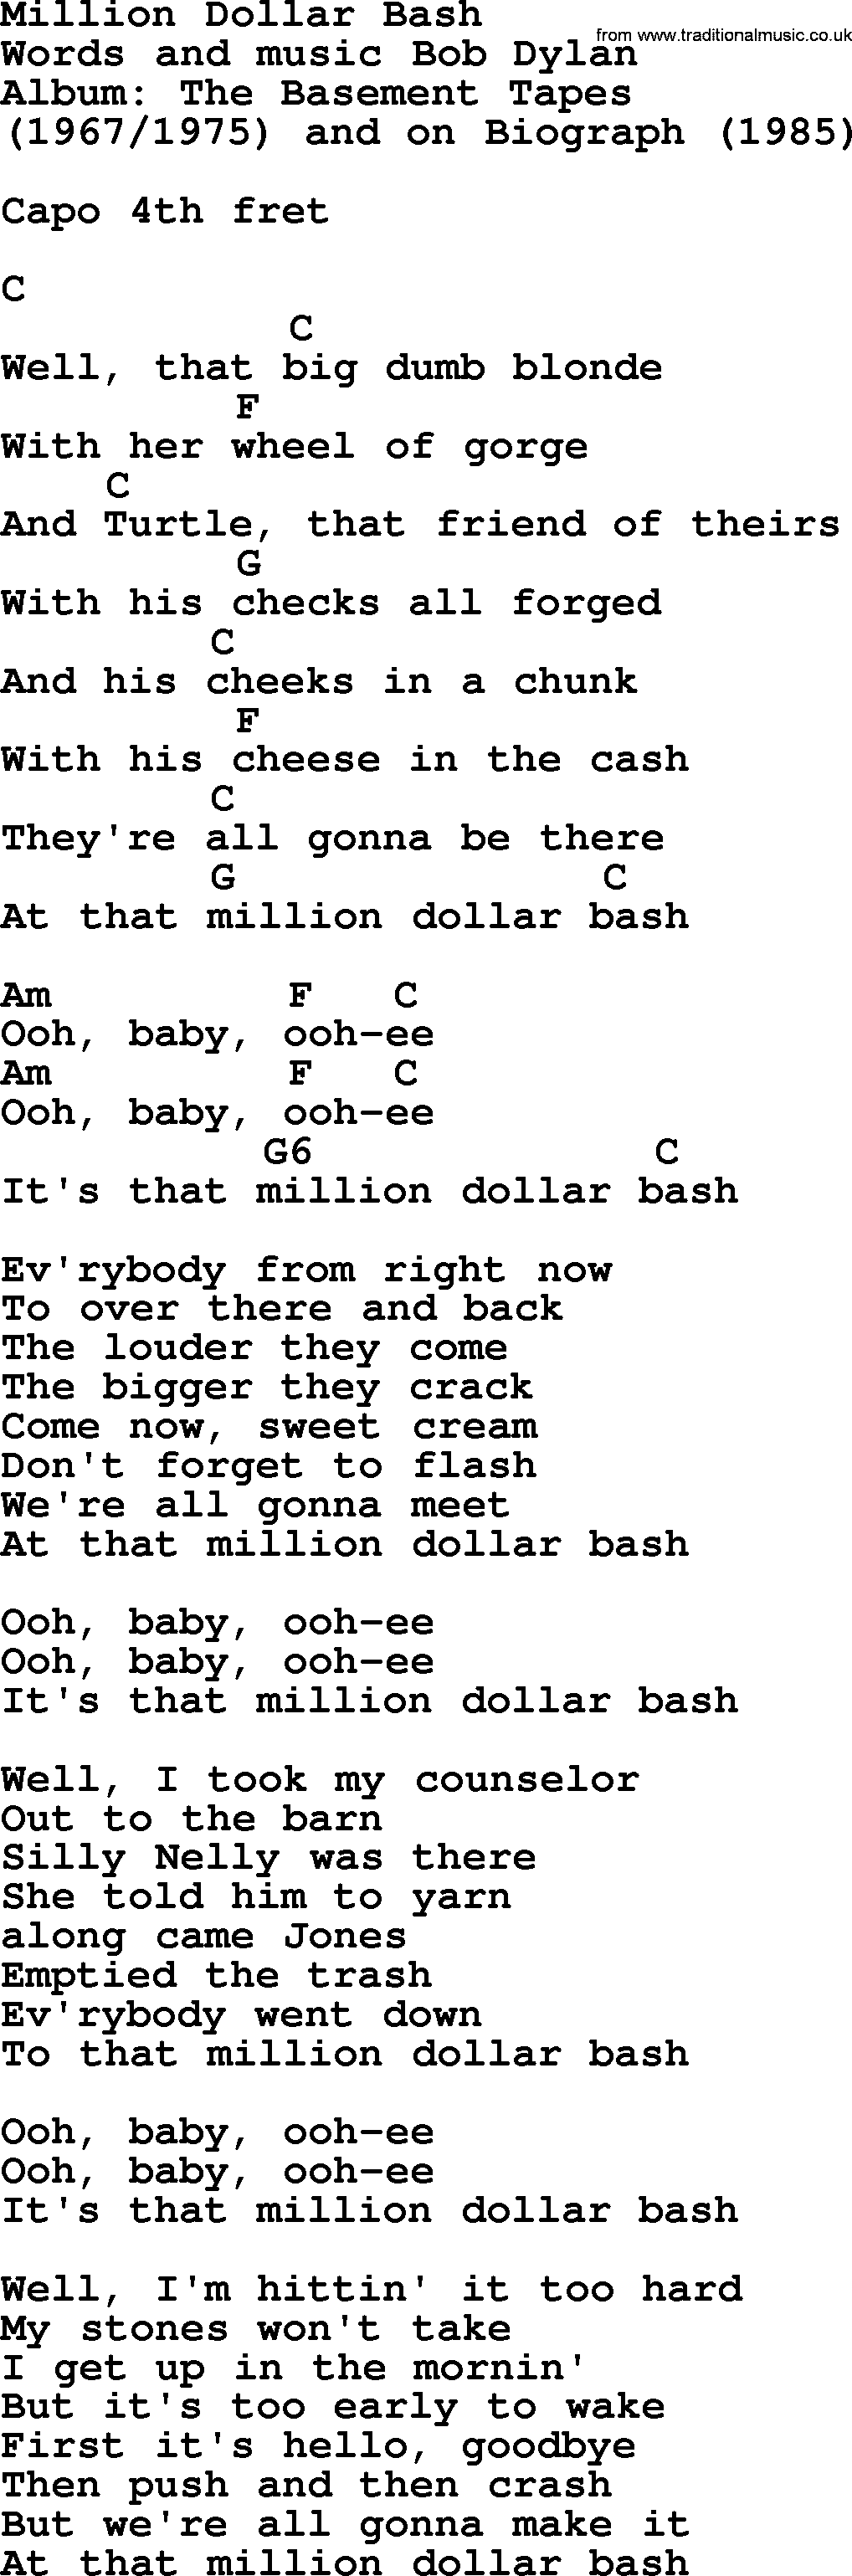 Bob Dylan song, lyrics with chords - Million Dollar Bash